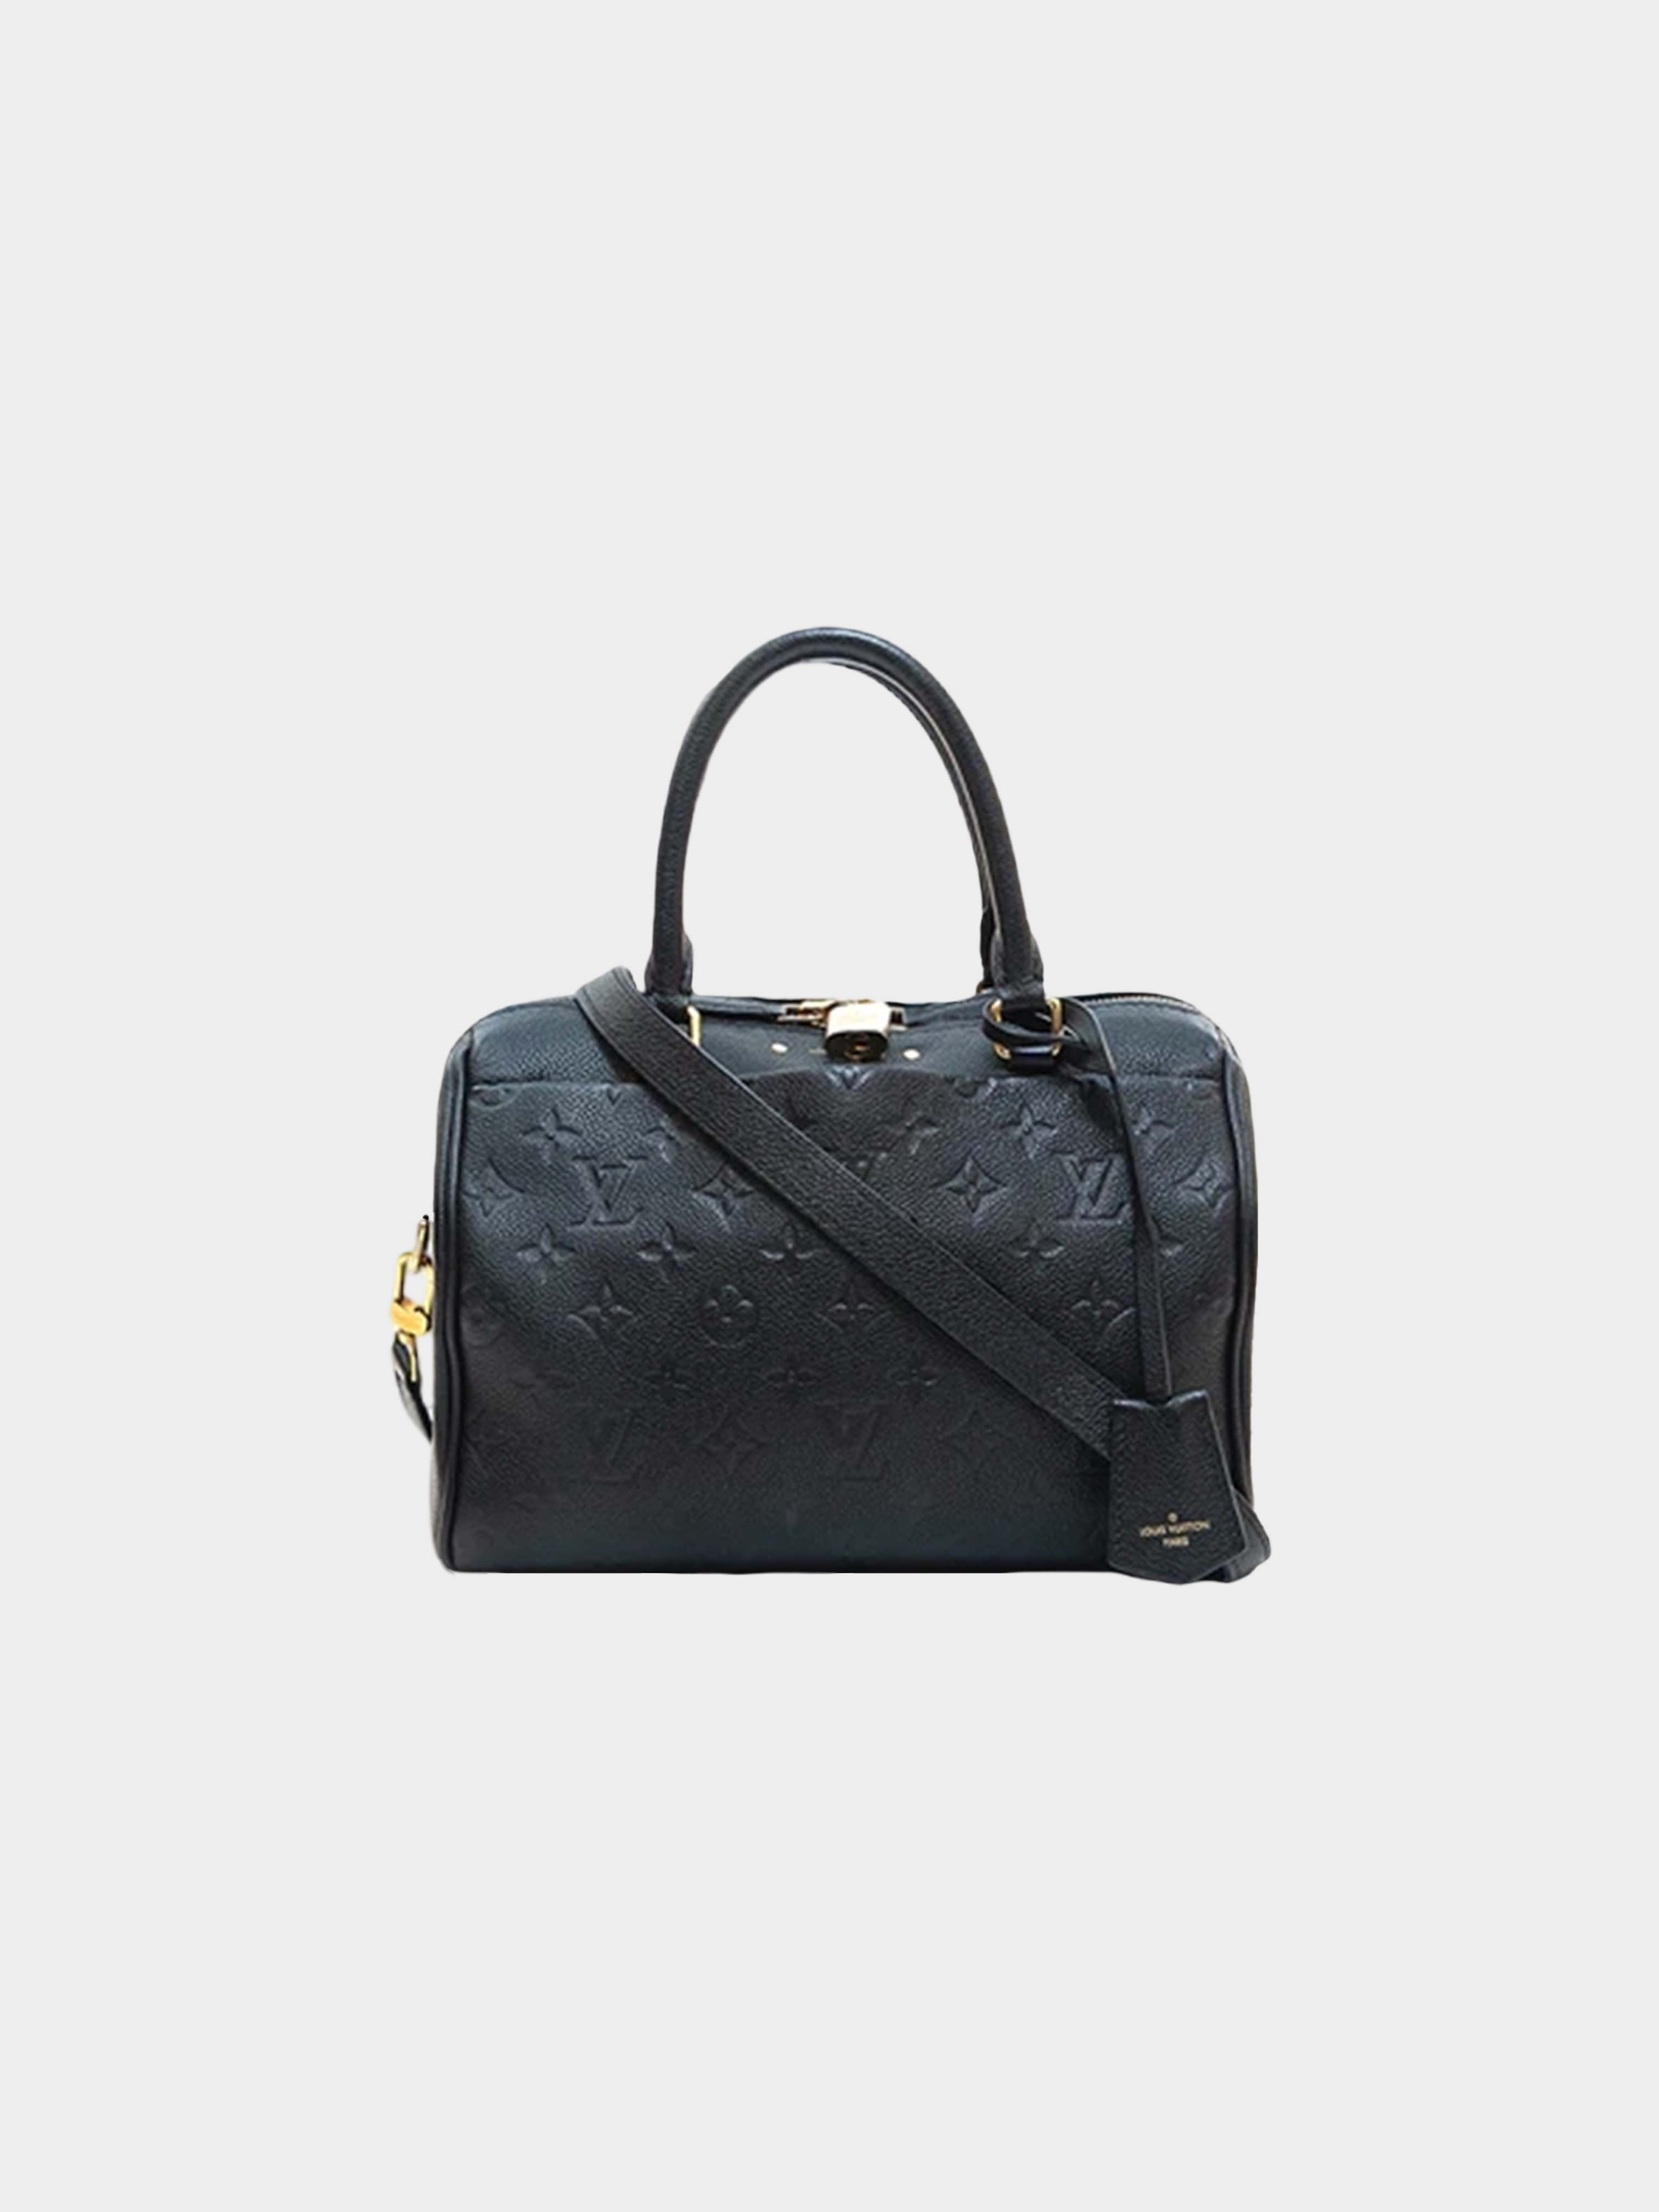 Louis Vuitton 2017 Black Speedy Bandouliere Handbag